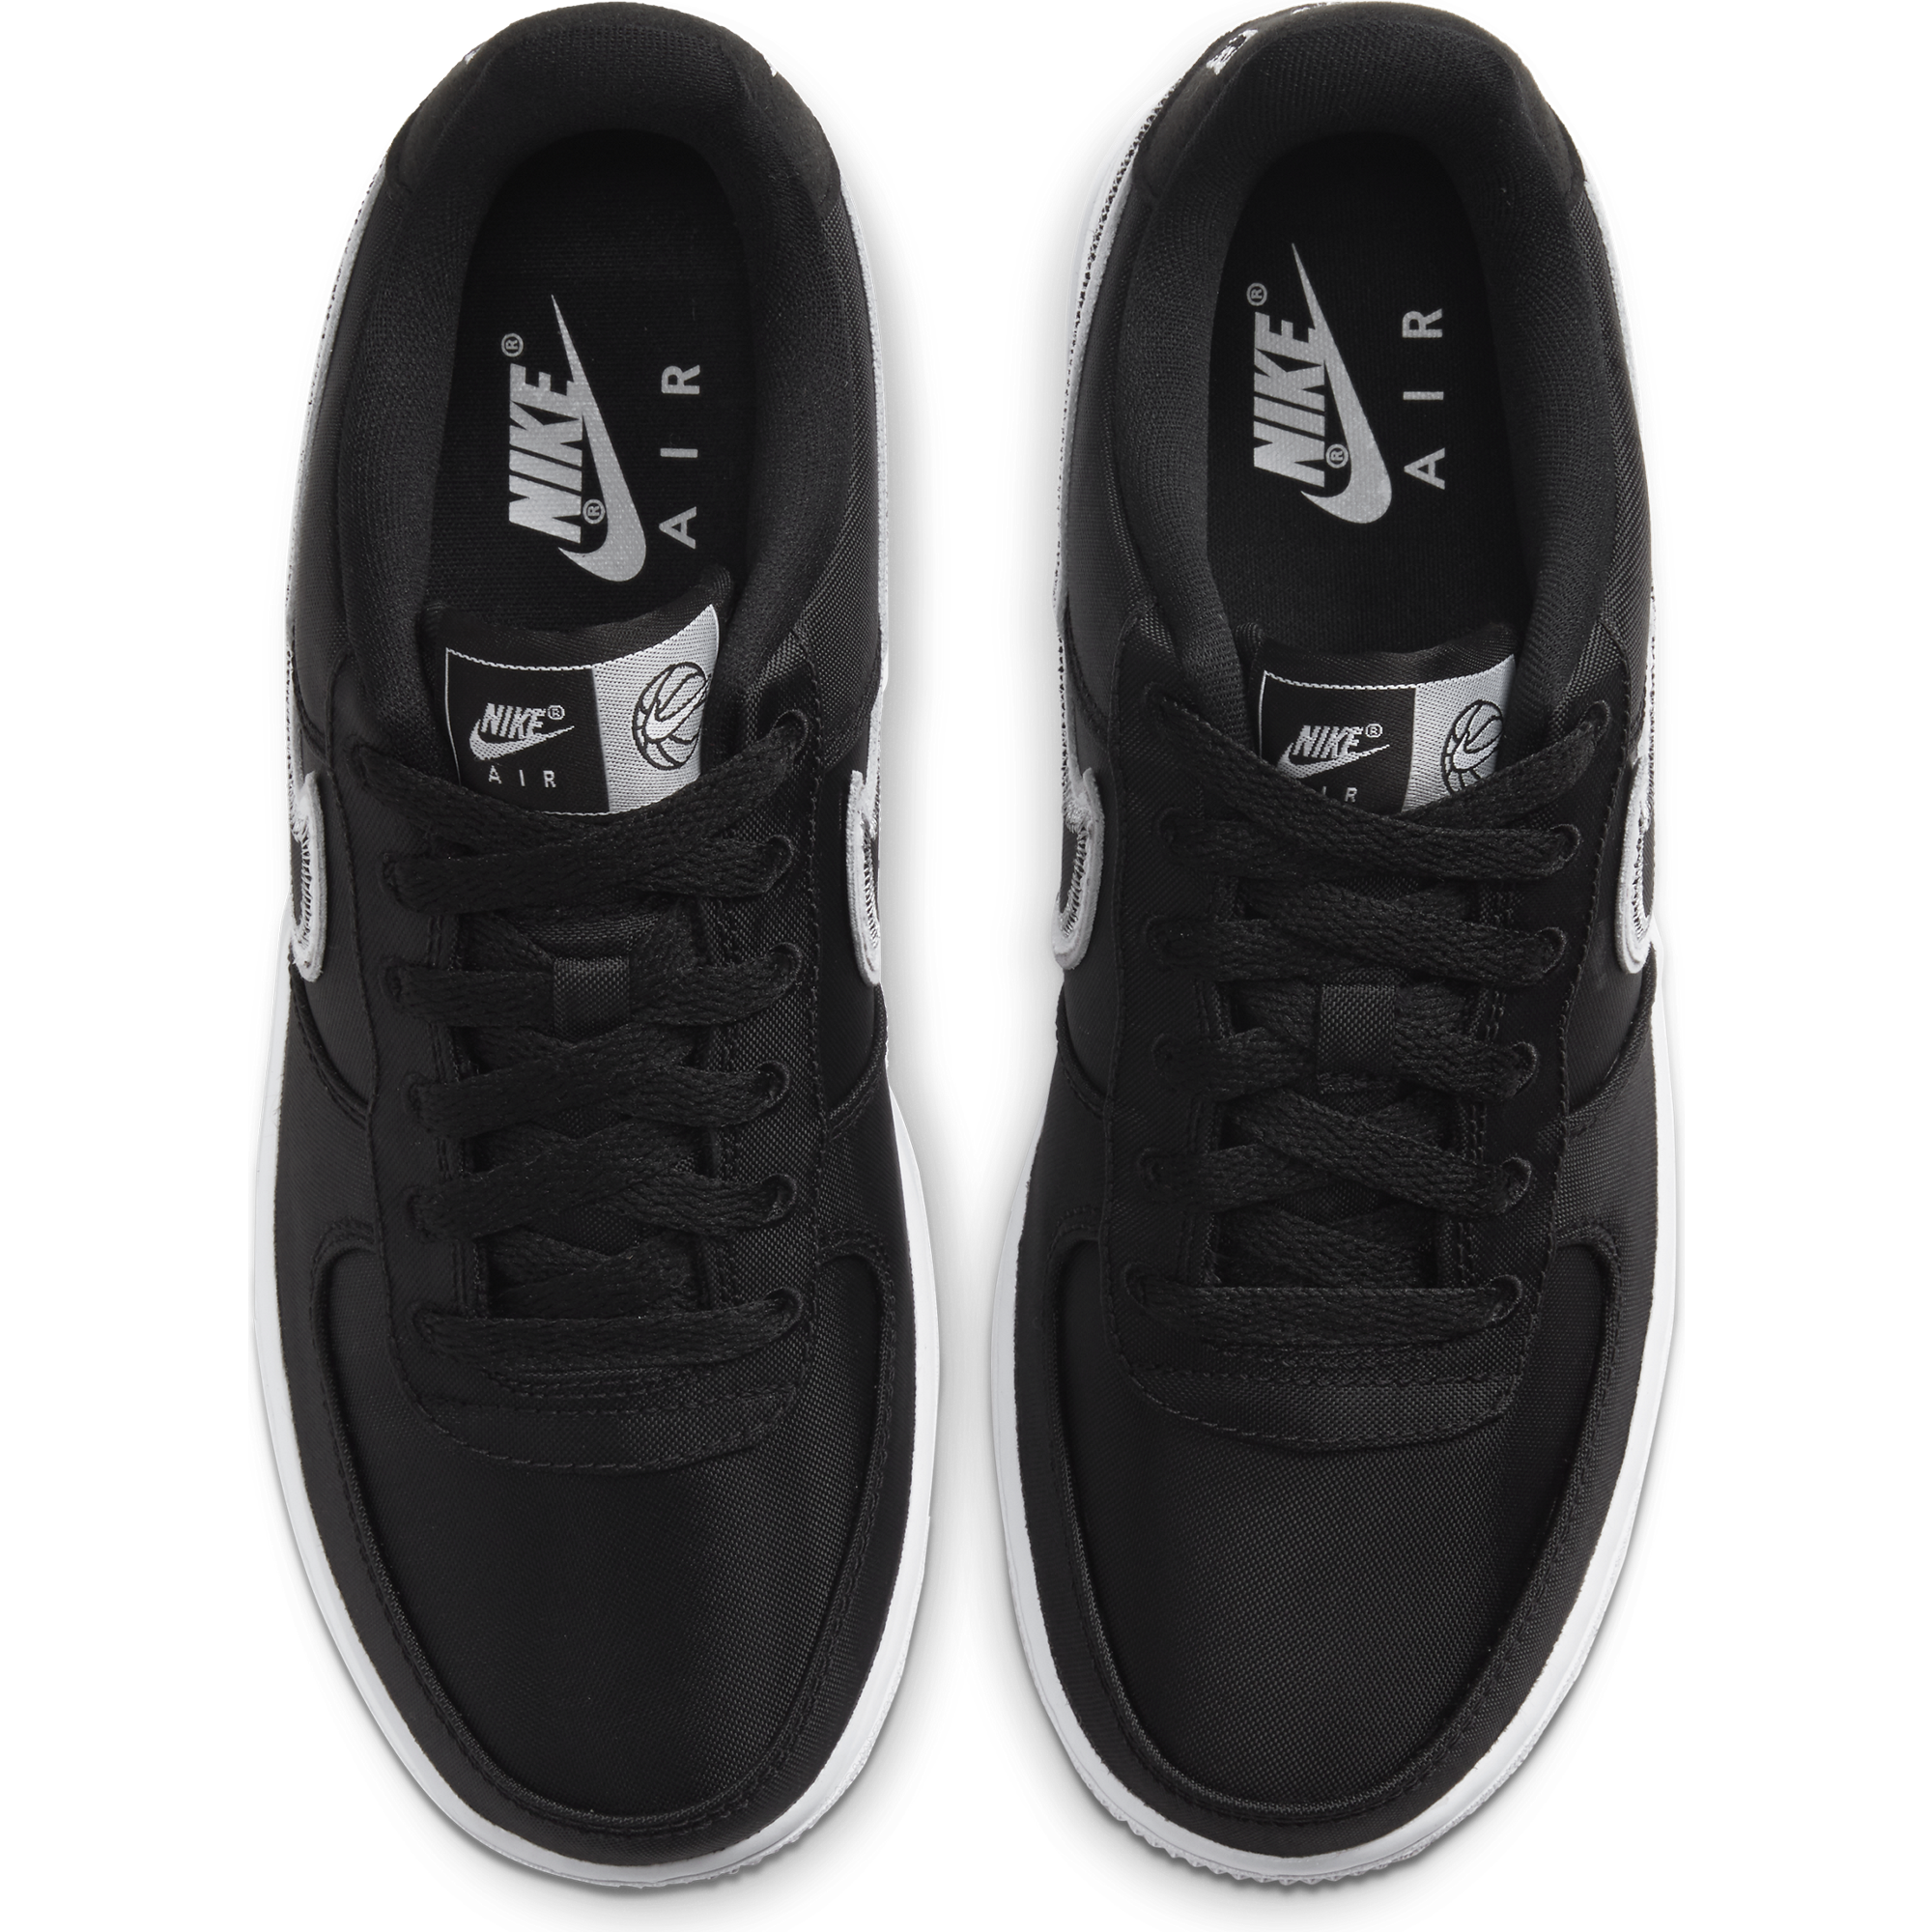 nike air force 1 low grade school shoes black